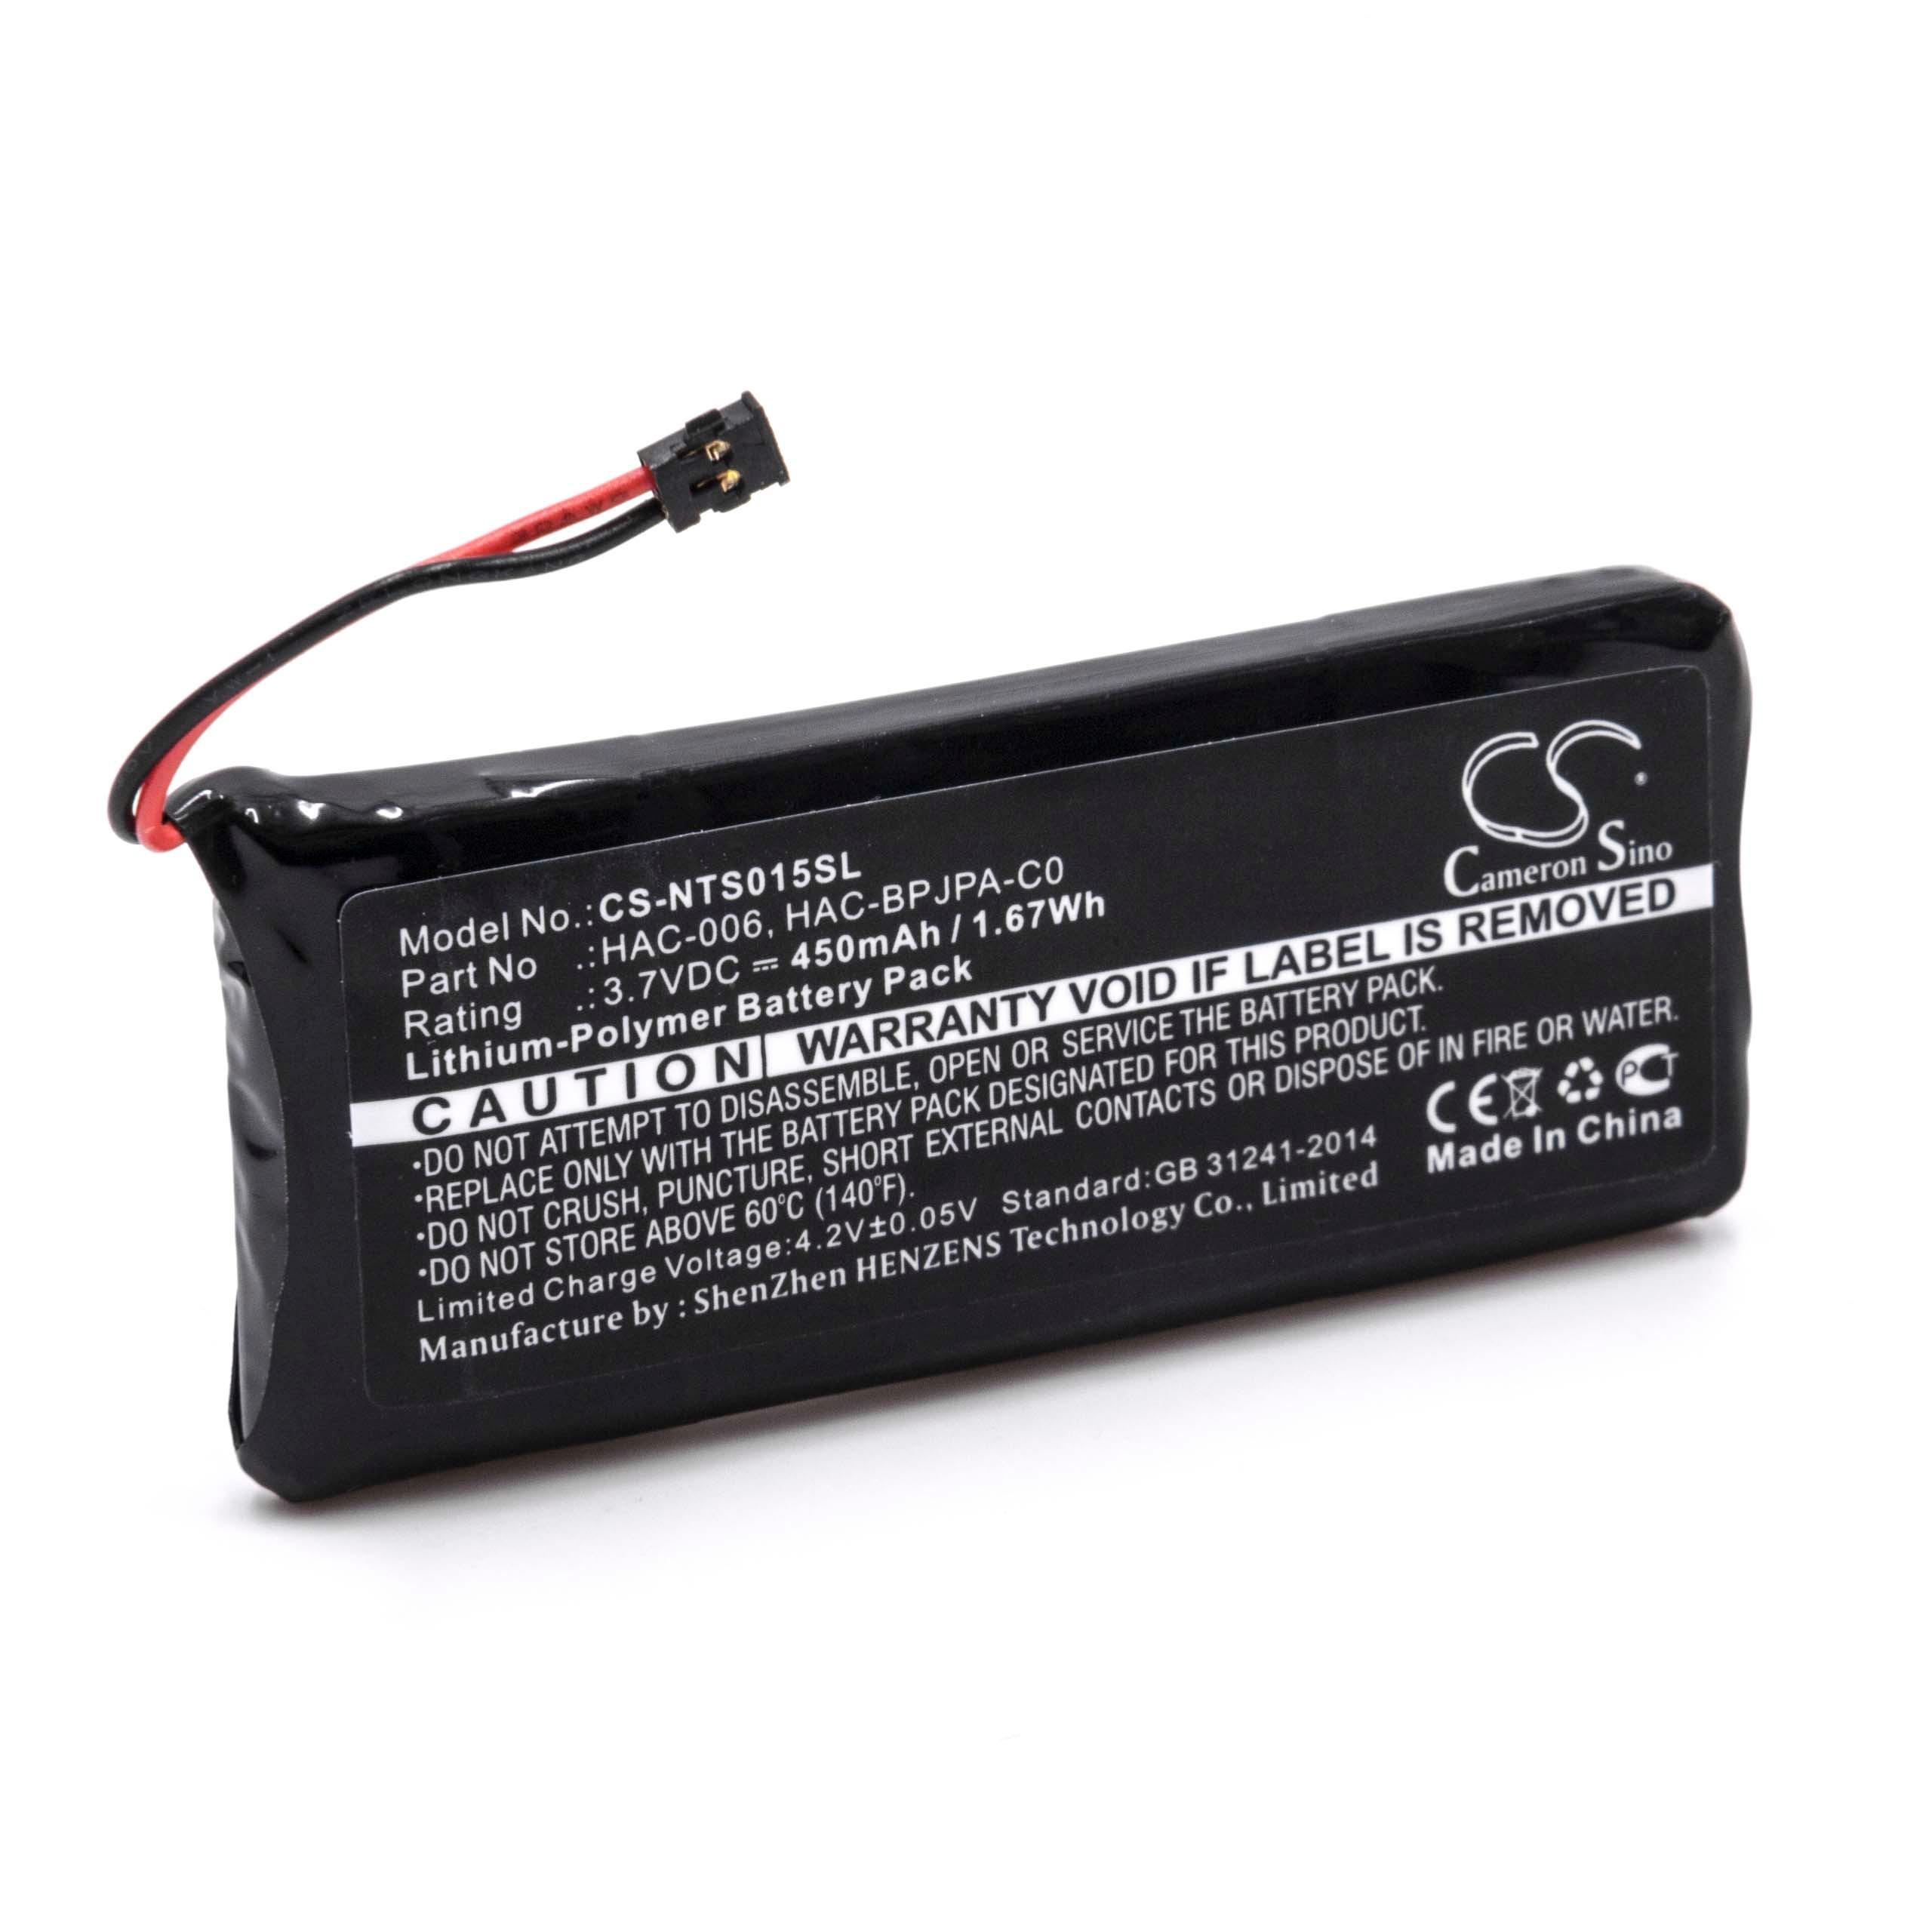 Batteria per gamepad sostituisce Nintendo HAC-BPJPA-C0, HAC-006 - 450mAh, 3,7V